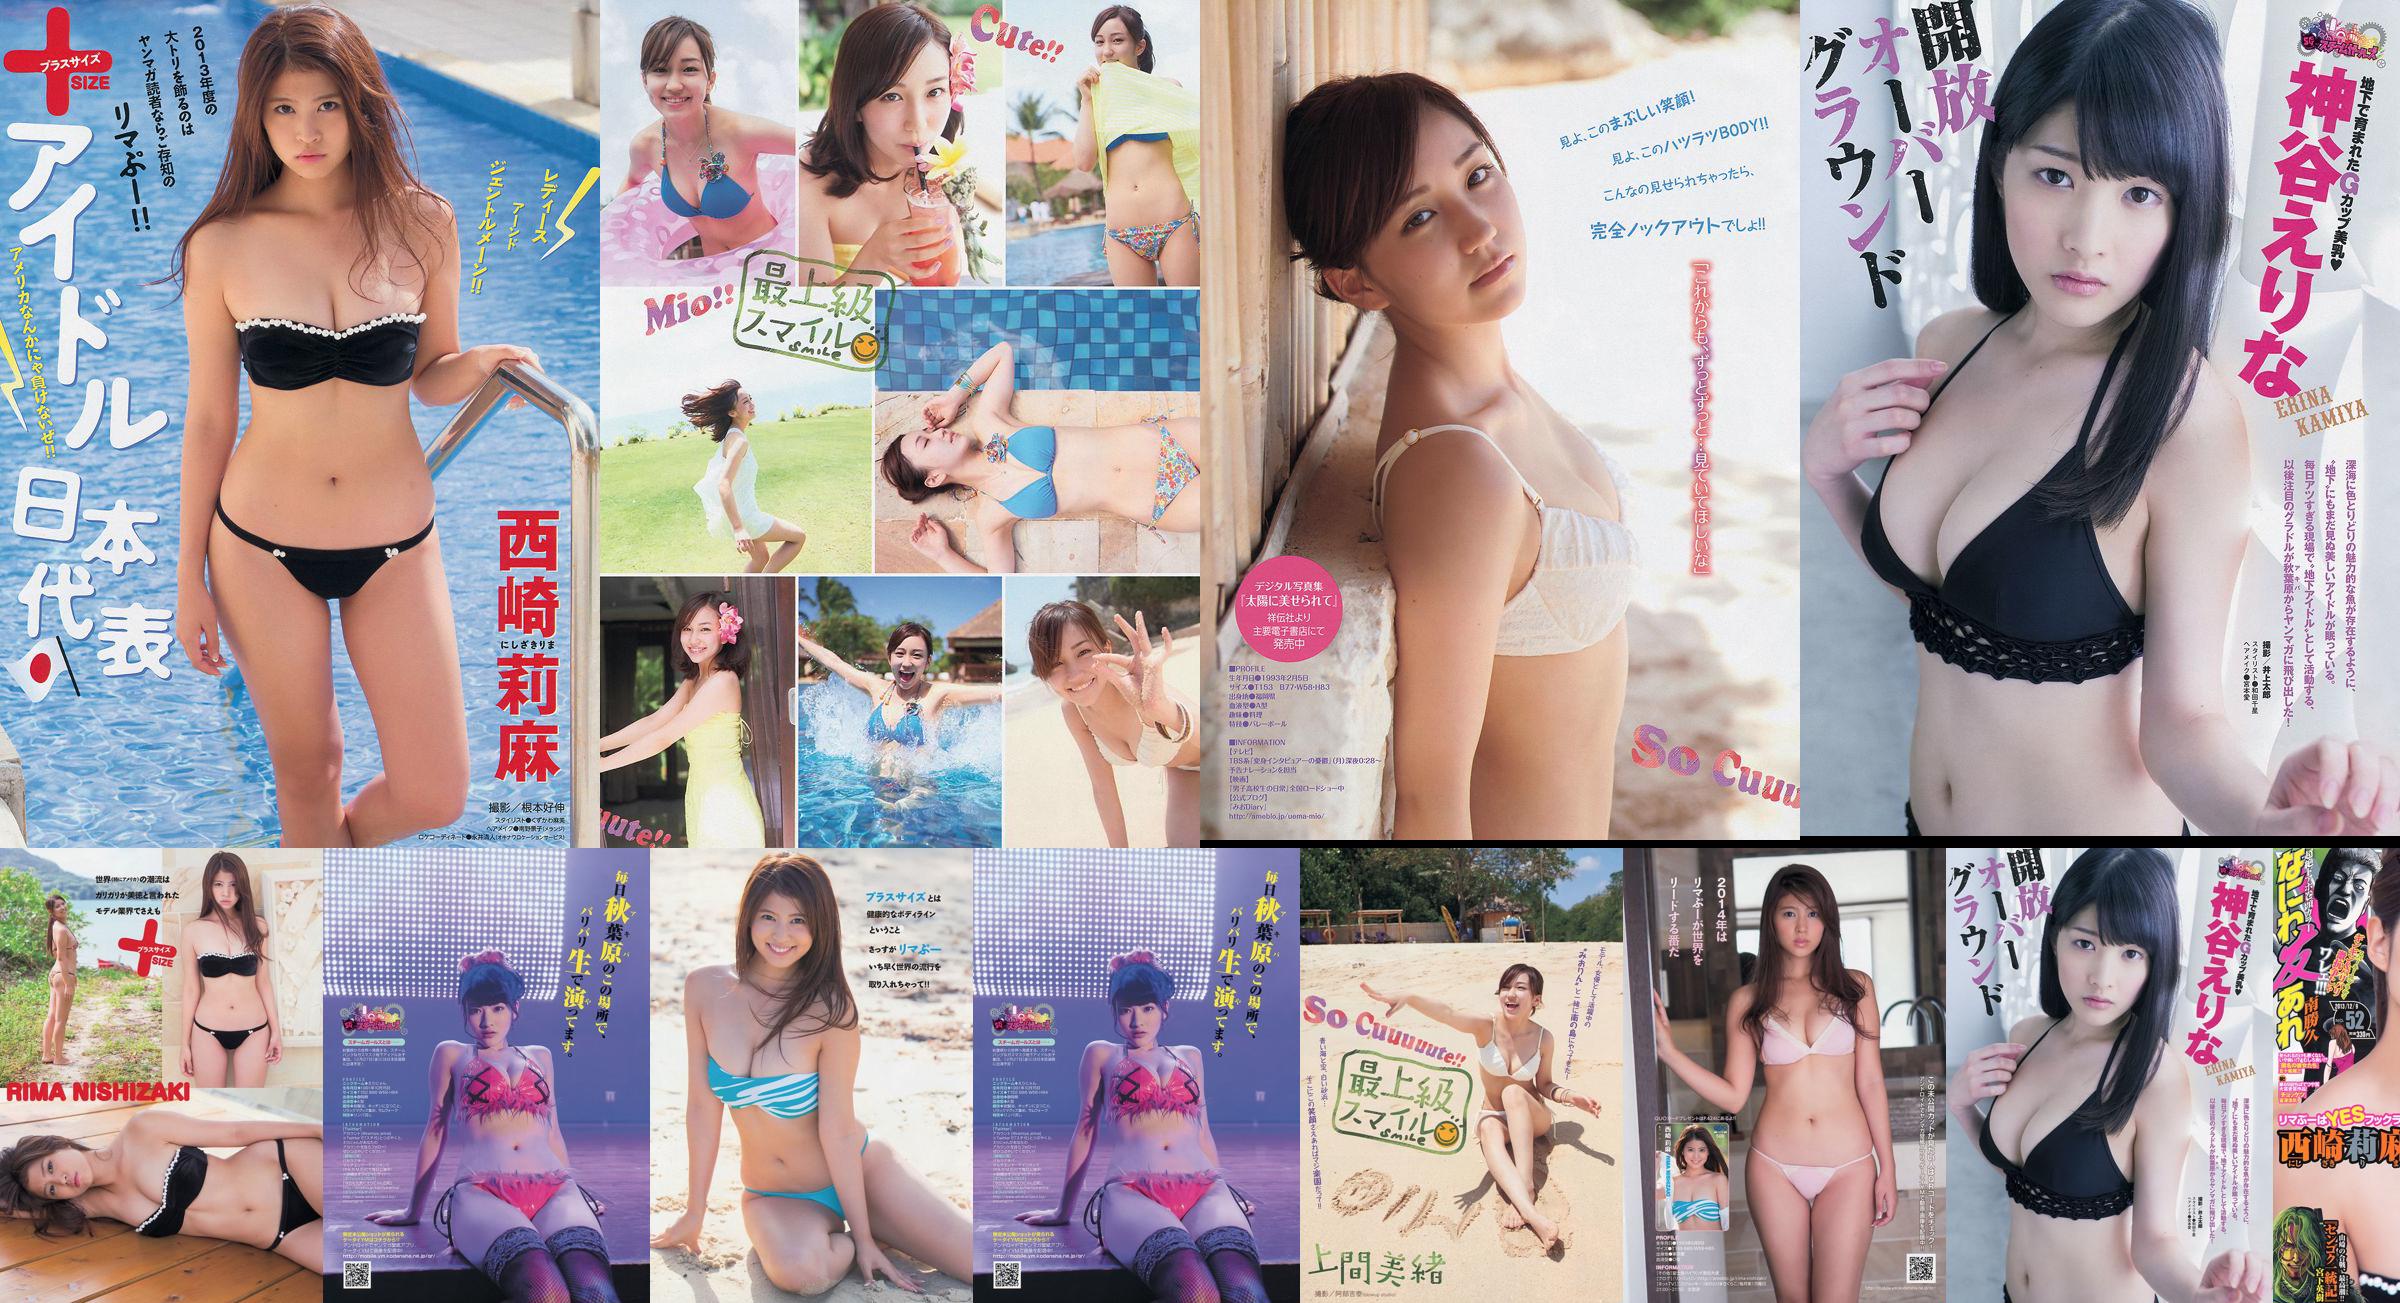 [Majalah Muda] Rima Nishizaki Mio Uema Erina Kamiya 2013 No.52 Foto Moshi No.273d40 Halaman 1